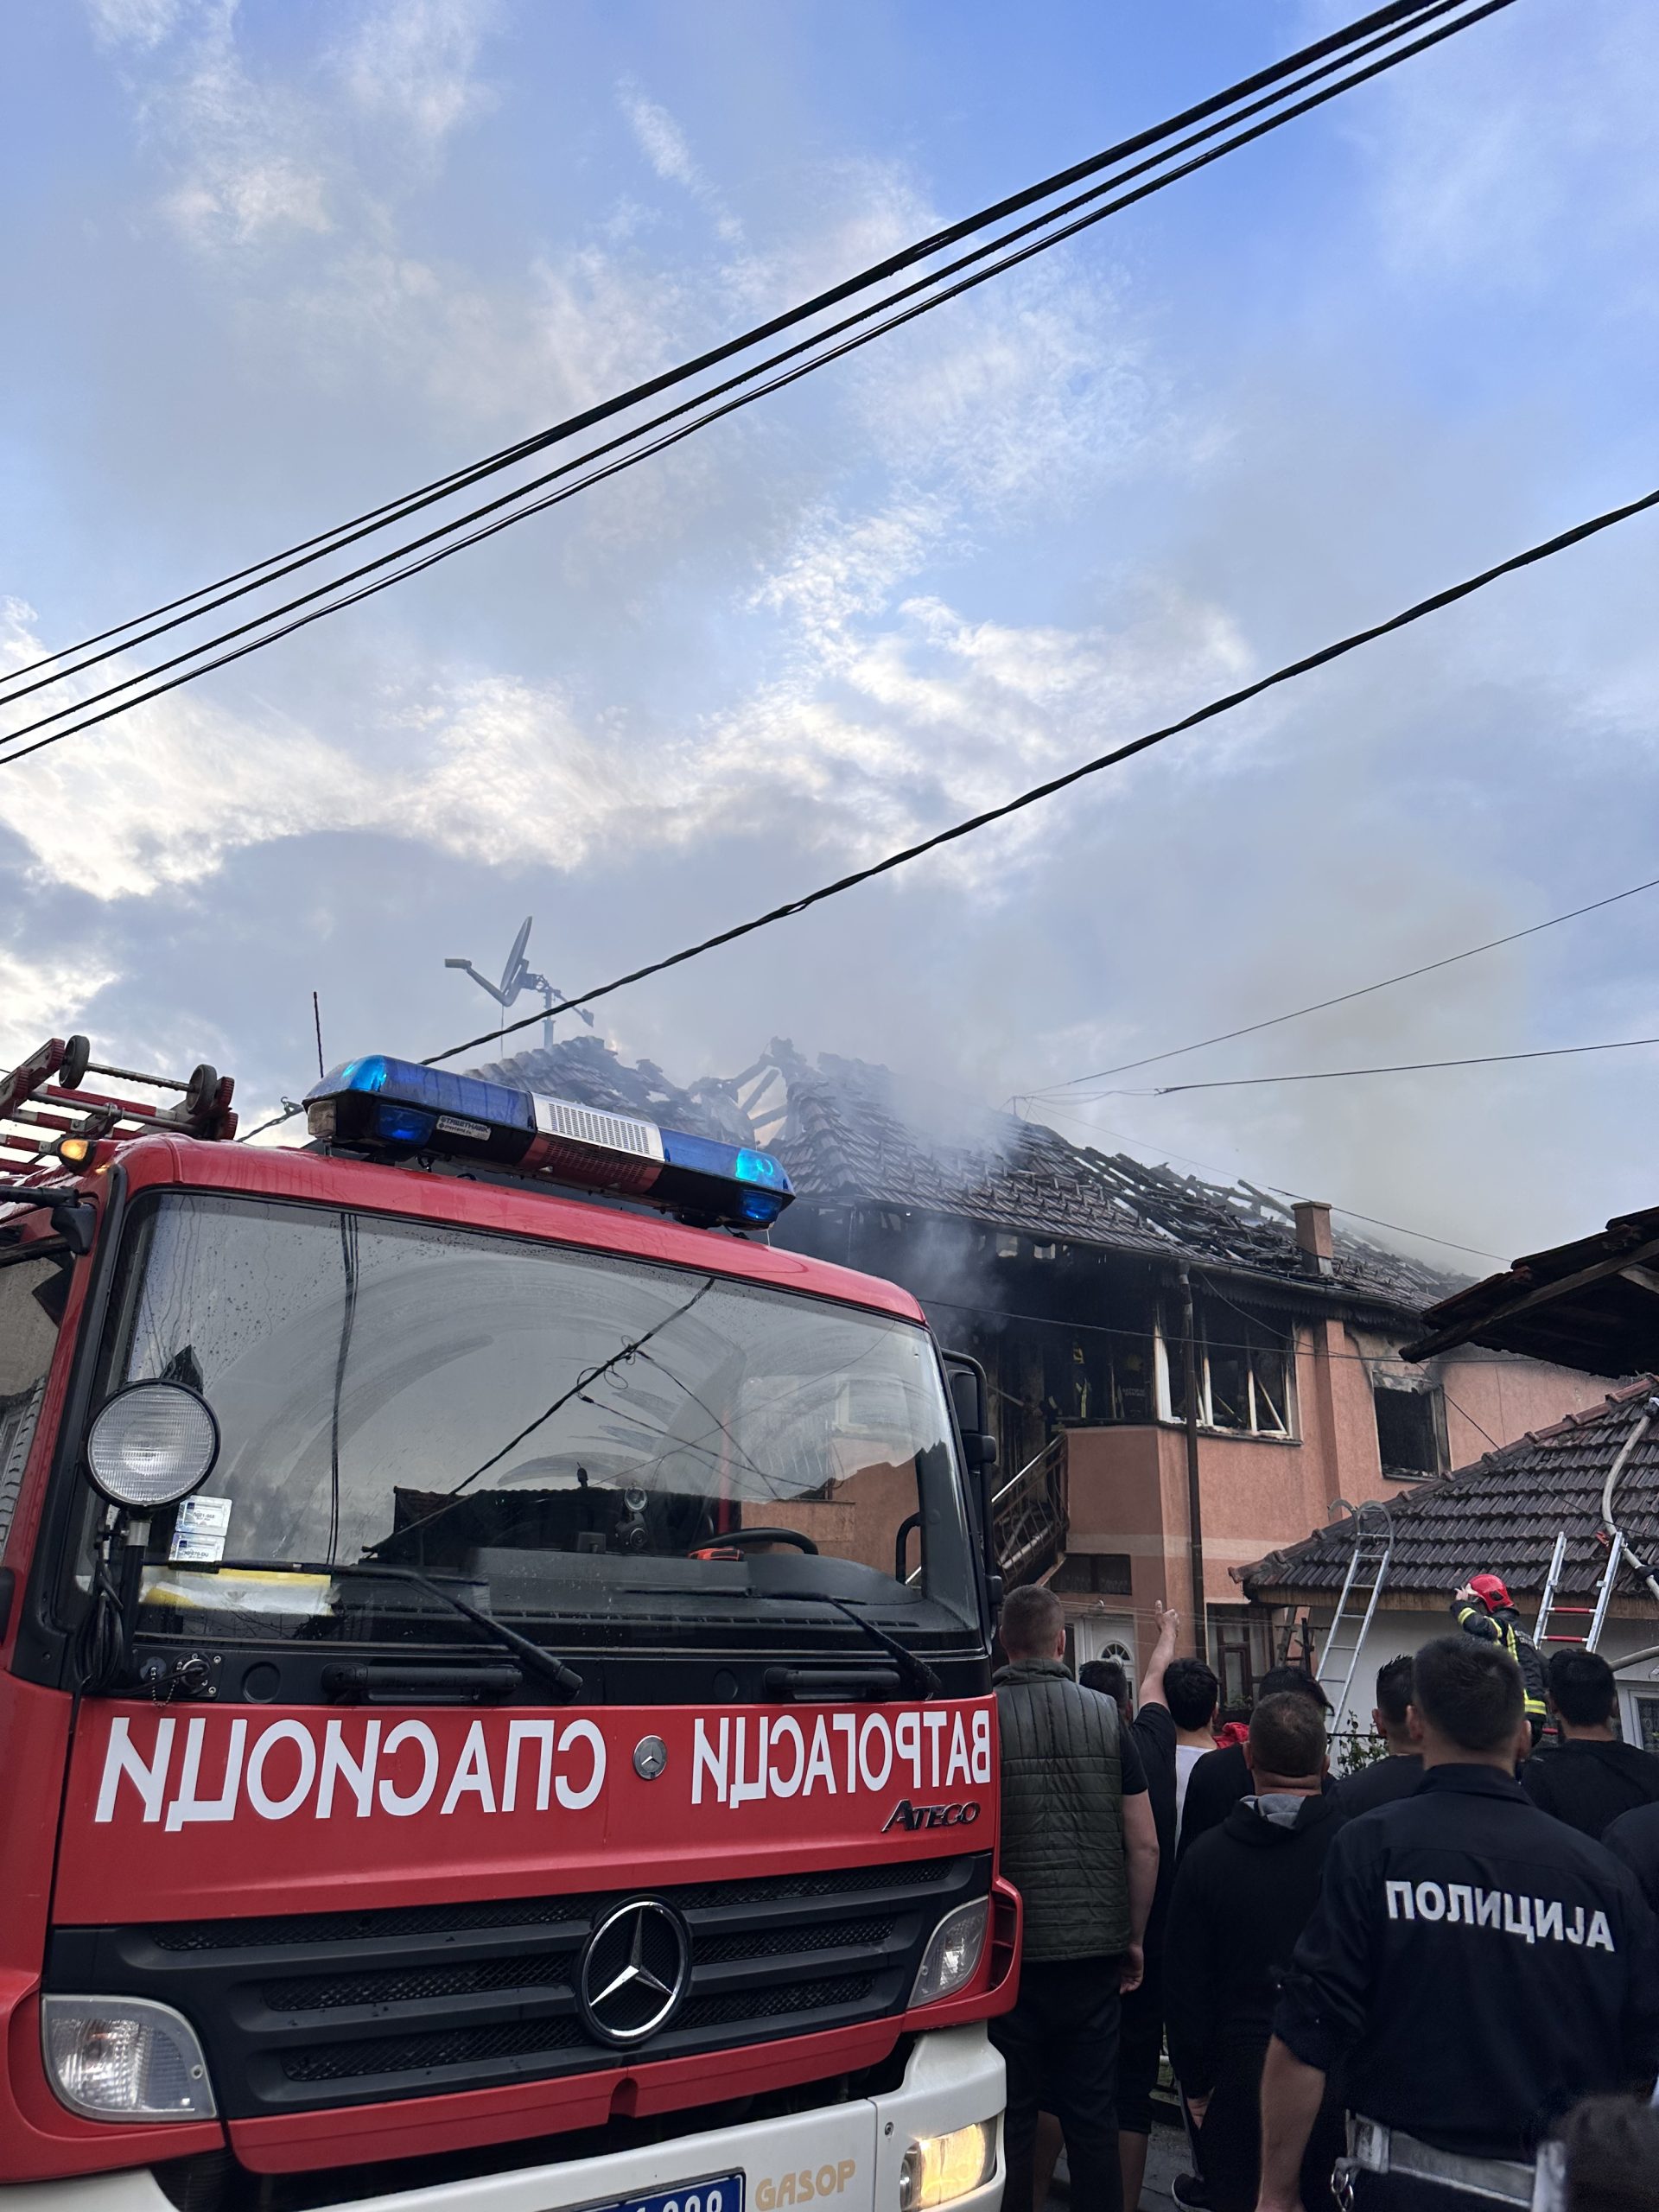 Šta Novopazarci misle o opremljenosti vatrogasne službe? (VIDEO)